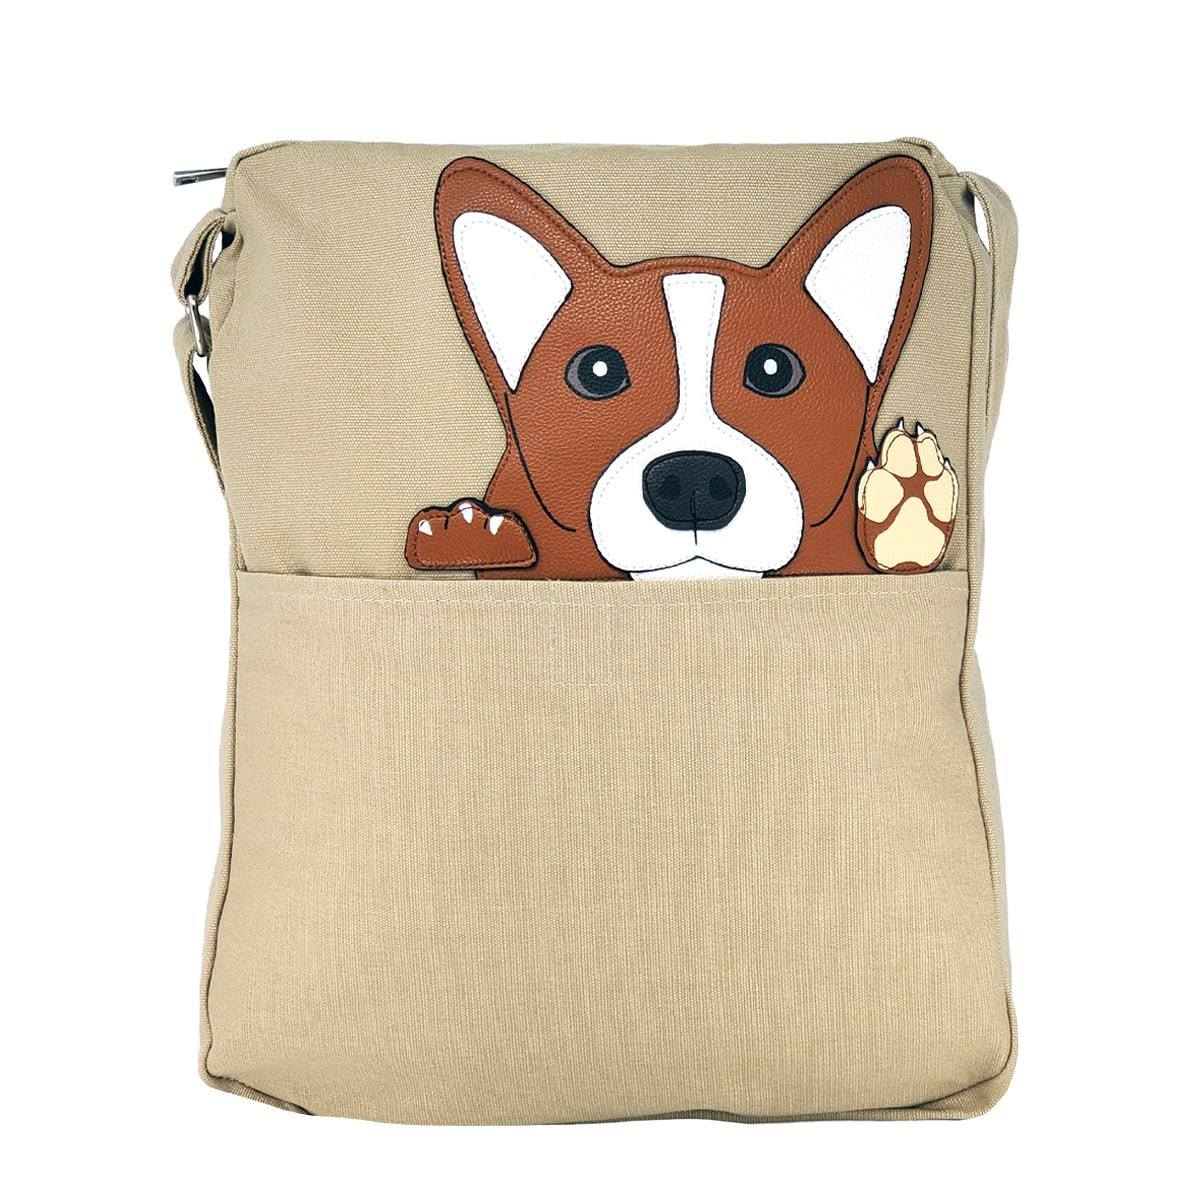 Corgi Messenger Bag - Women's Dog Satchel | Pakapalooza